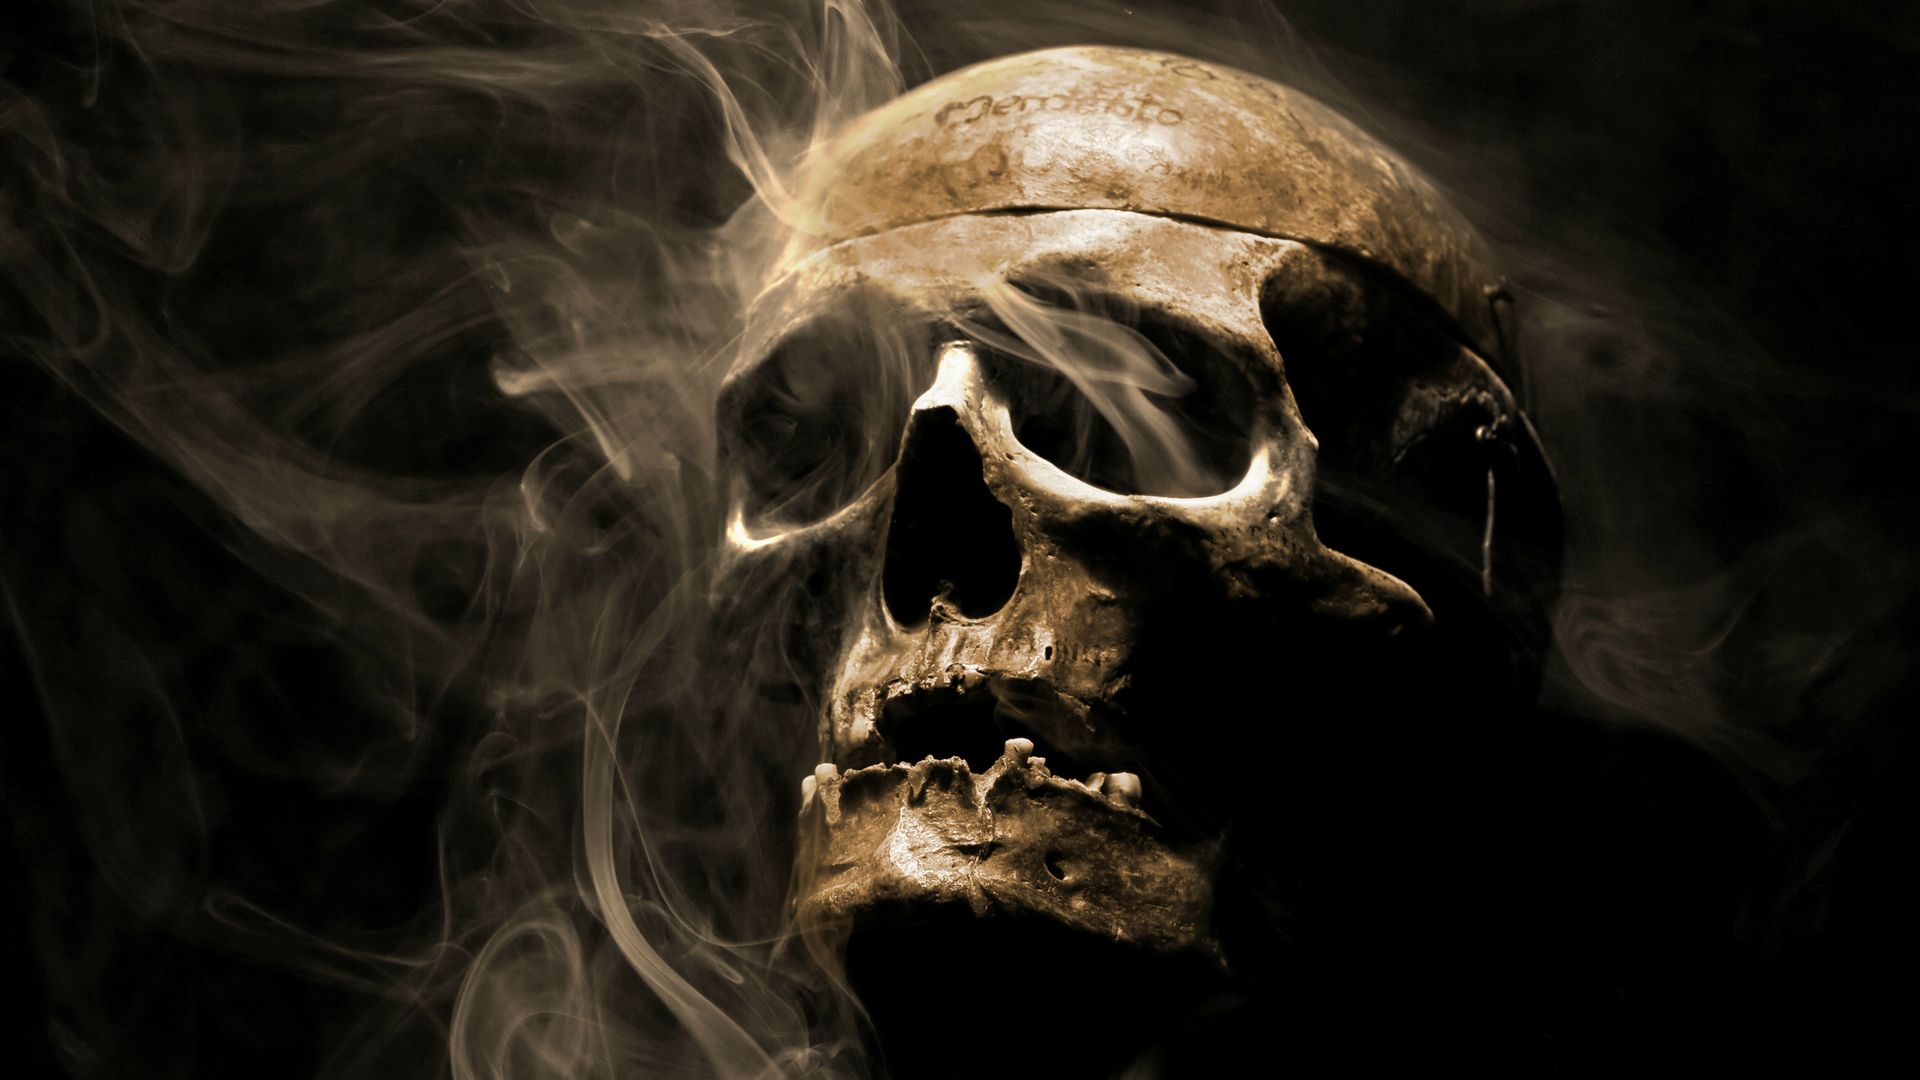 The Skull And Smoke Desktop Wallpaper Picture For Desktoppicture